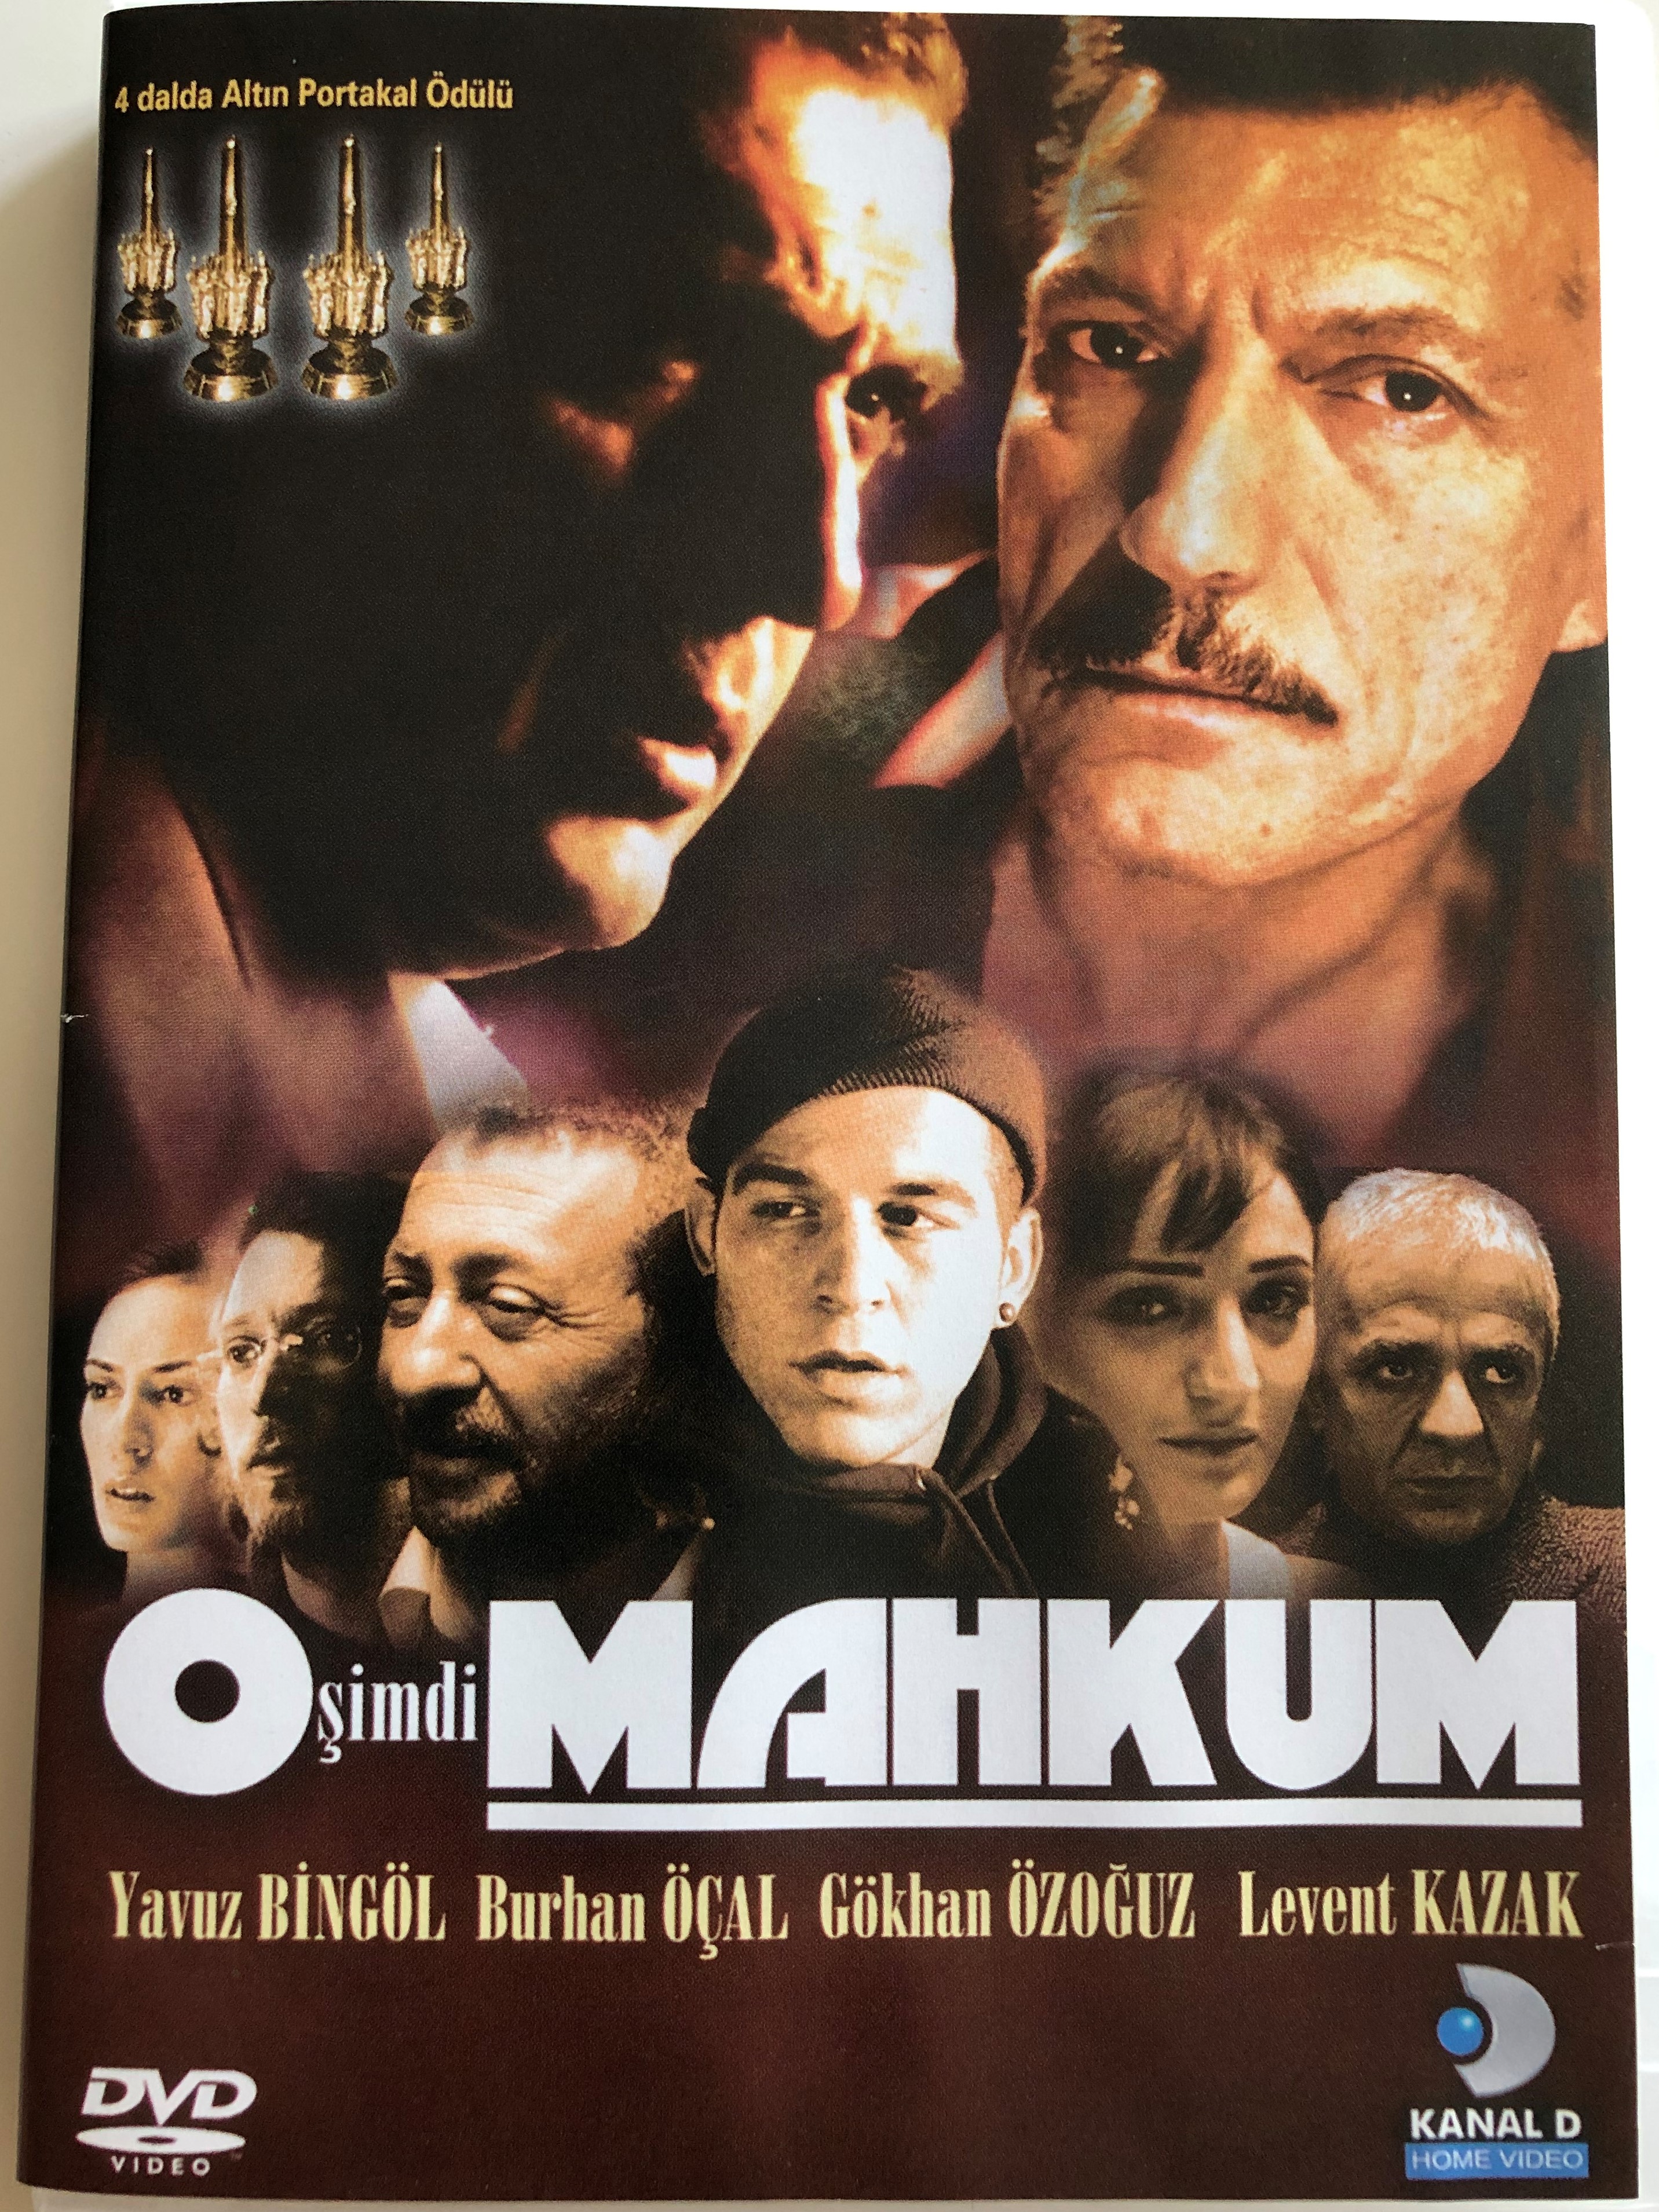 o-imdi-mahkum-dvd-2005-in-the-jail-now-directed-by-abdullah-oguz-starring-yavuz-bing-l-burhan-al-g-khan-zo-uz-levent-kazak-erkan-can-zafer-alg-z-fadik-sevin-atasoy-1-.jpg